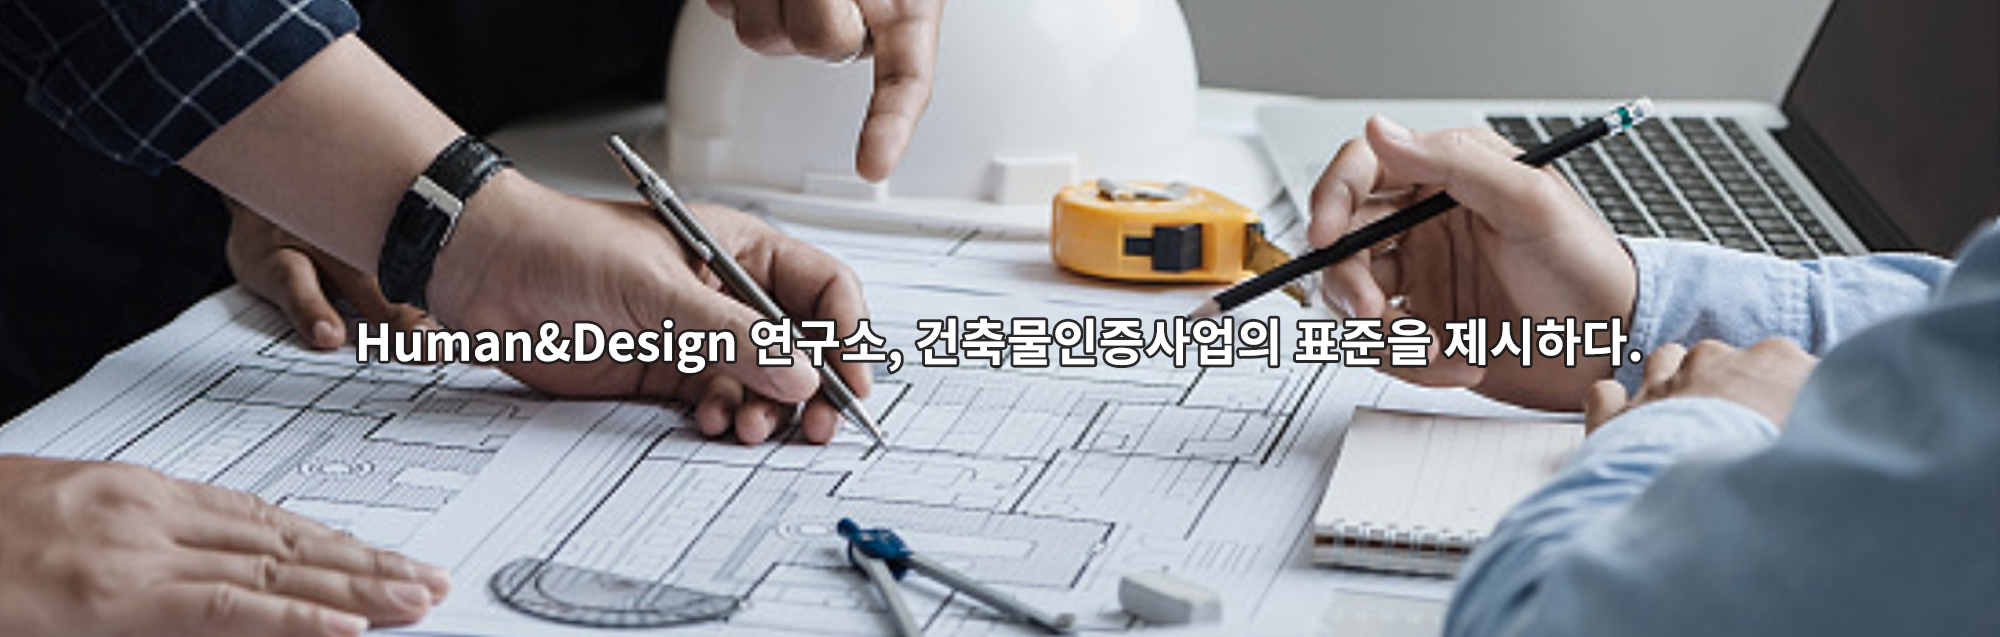 Human&Design 연구소, 건축물인증사업의 표준을 제시하다.